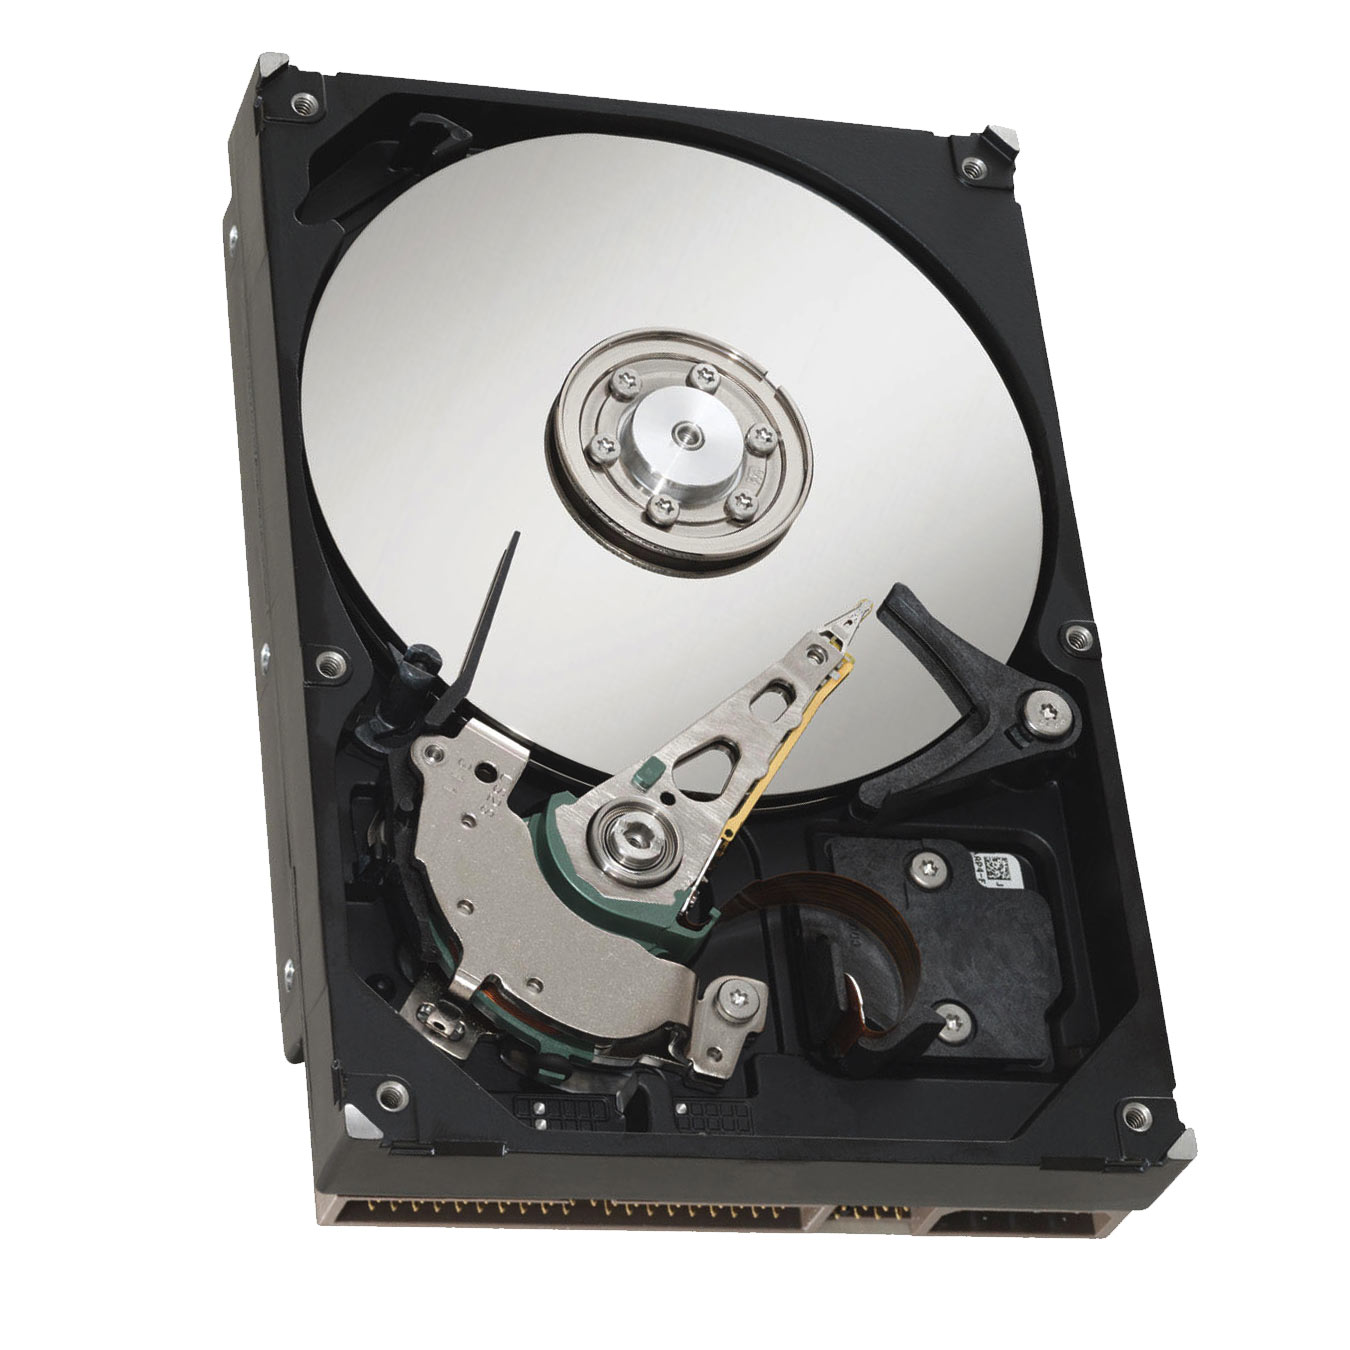 270948-002 | HP 5.1GB 3.5-inch EIDE Desktop Hard Drive for HP Prosignia 200 Server